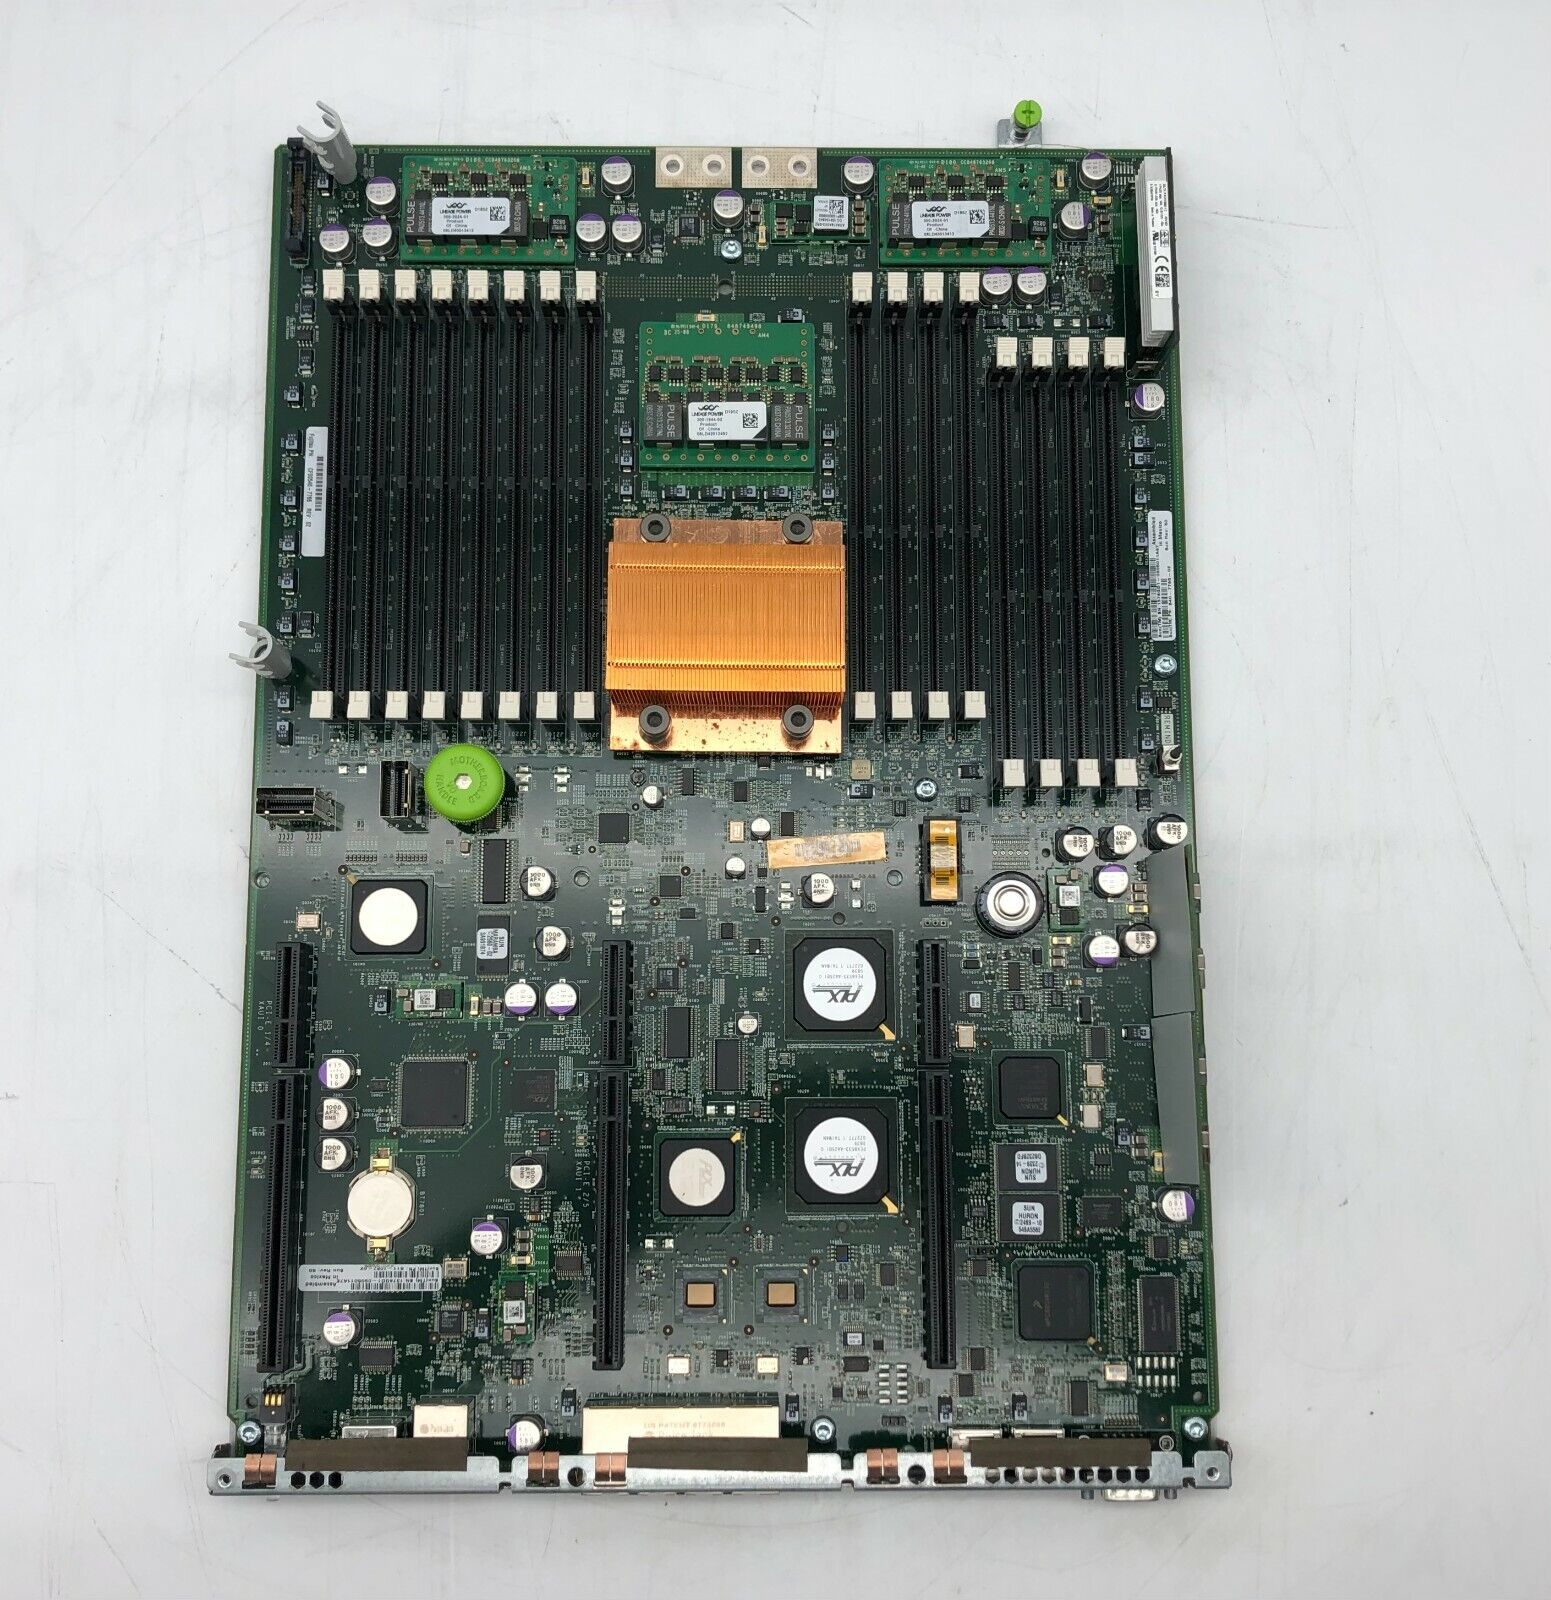 Sun 1.2GHz 8-Core T5220 System Board, 540-7765, 511-1087